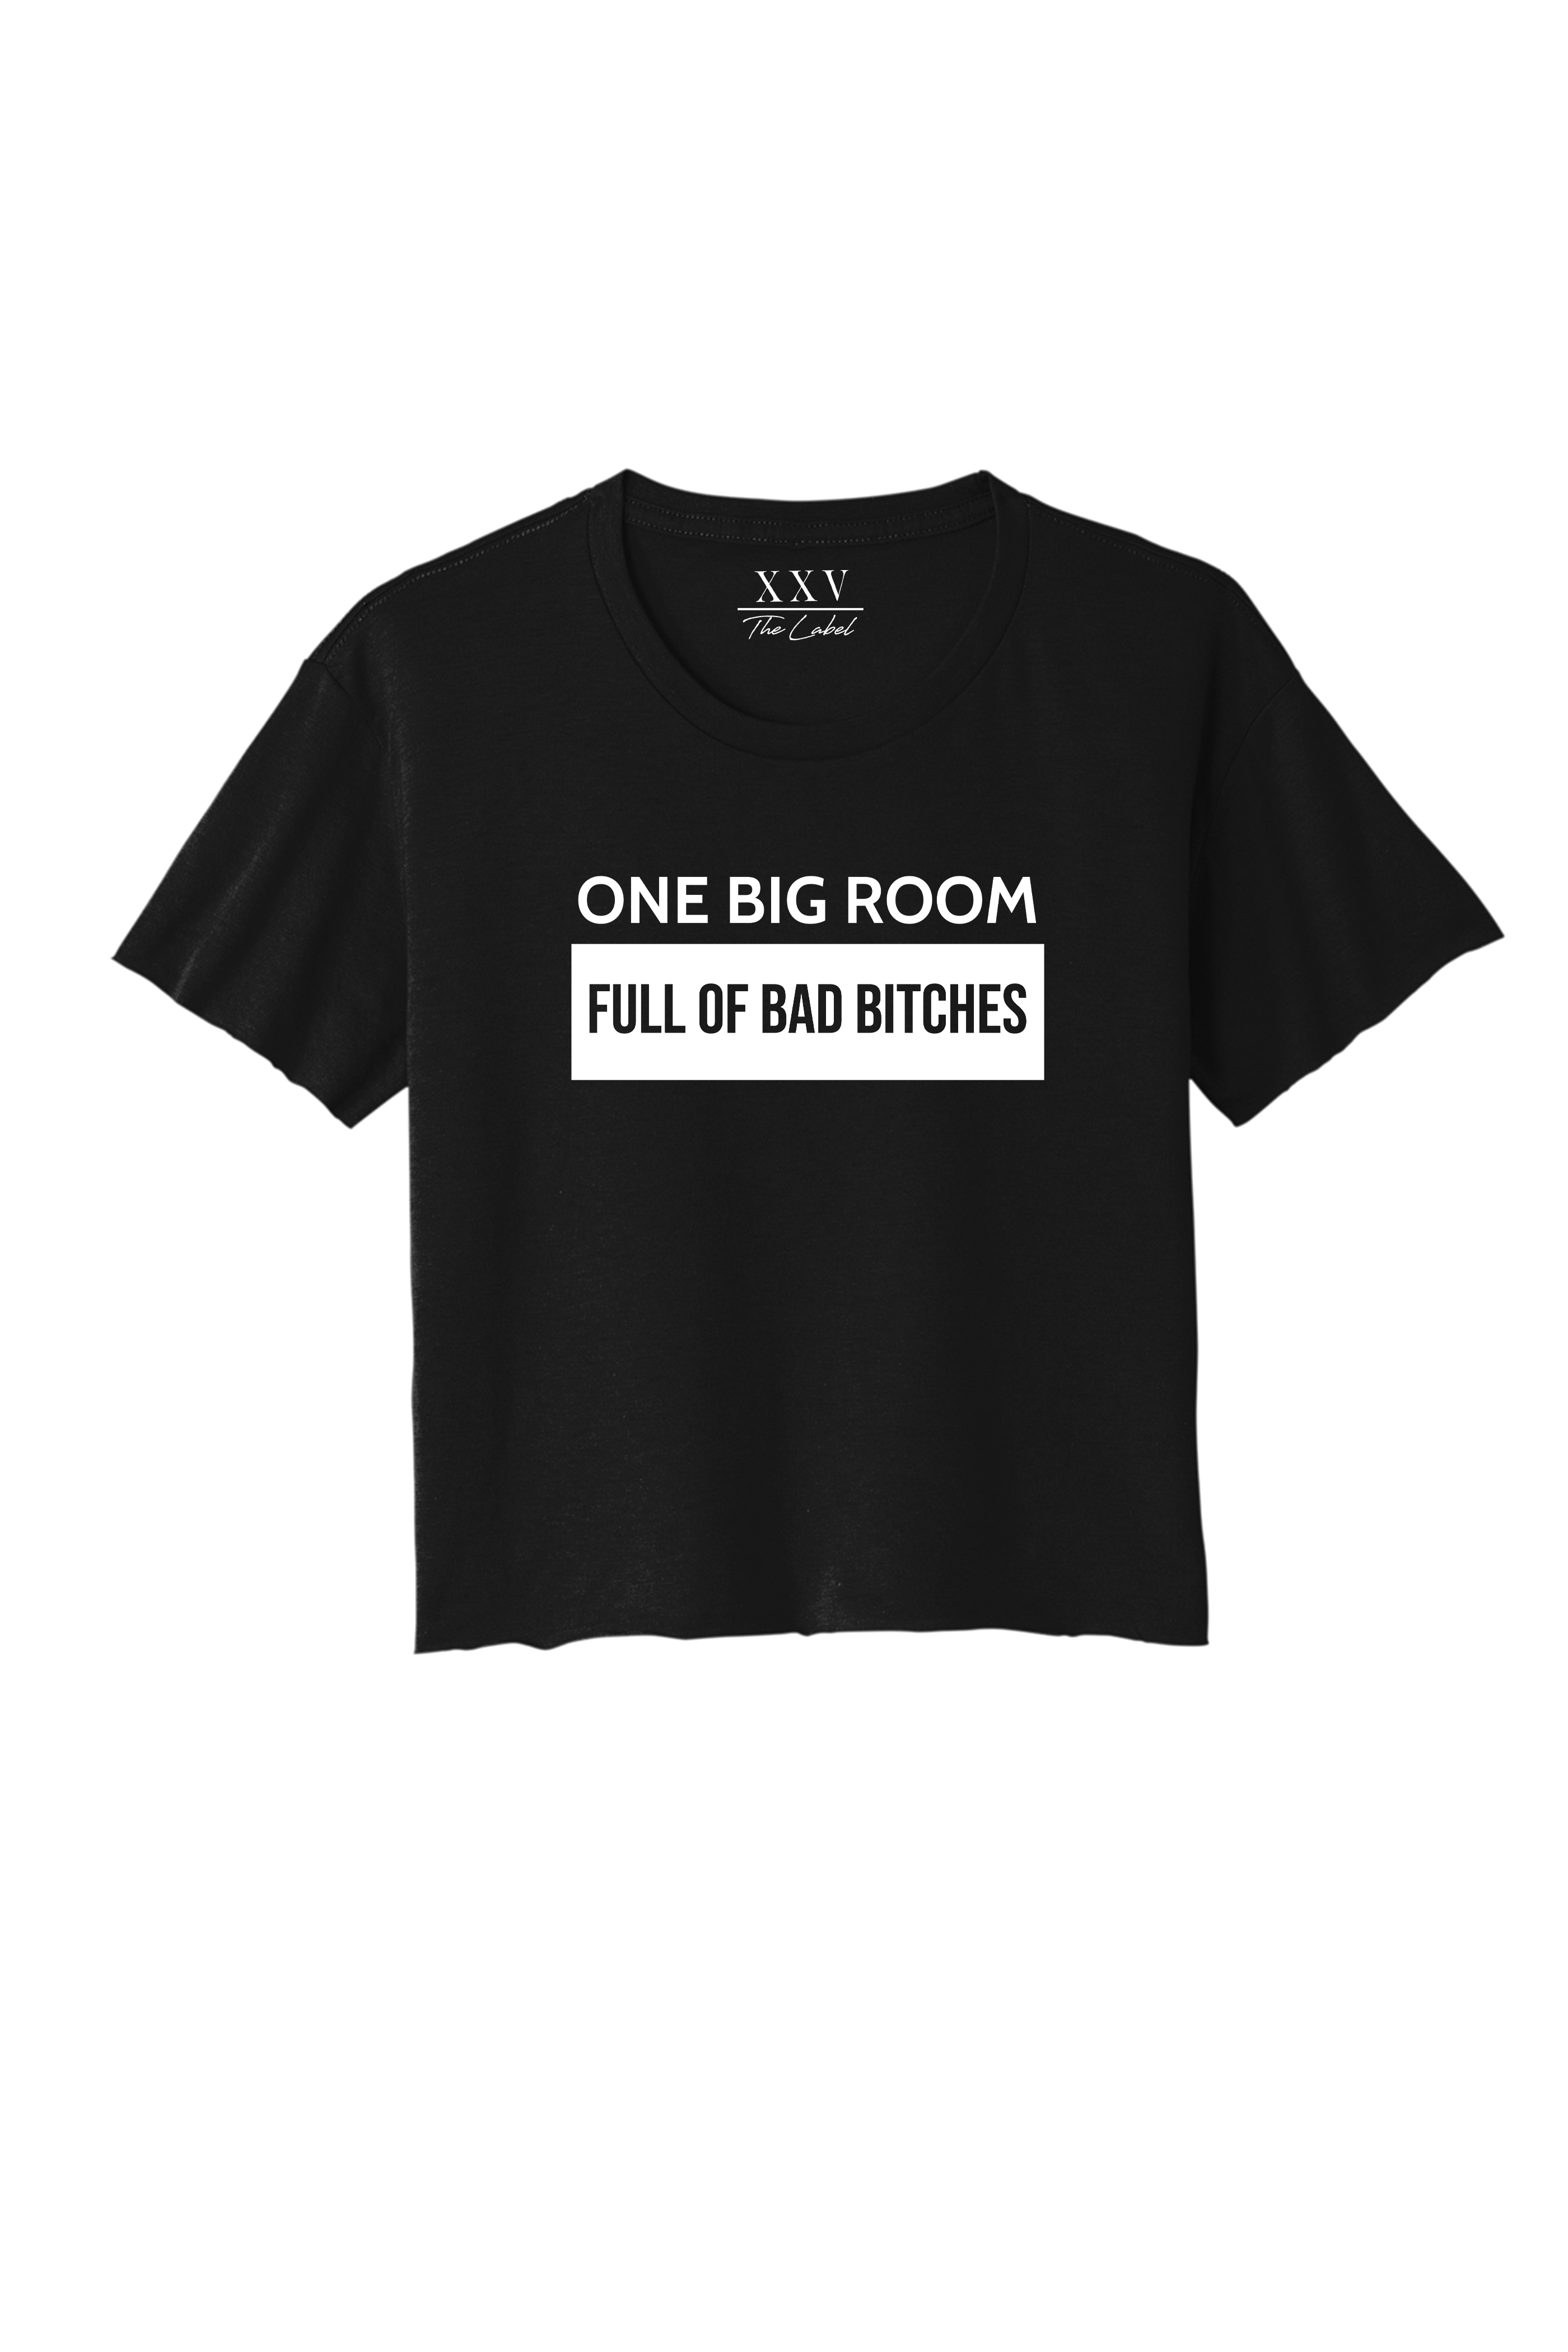 One Big Room